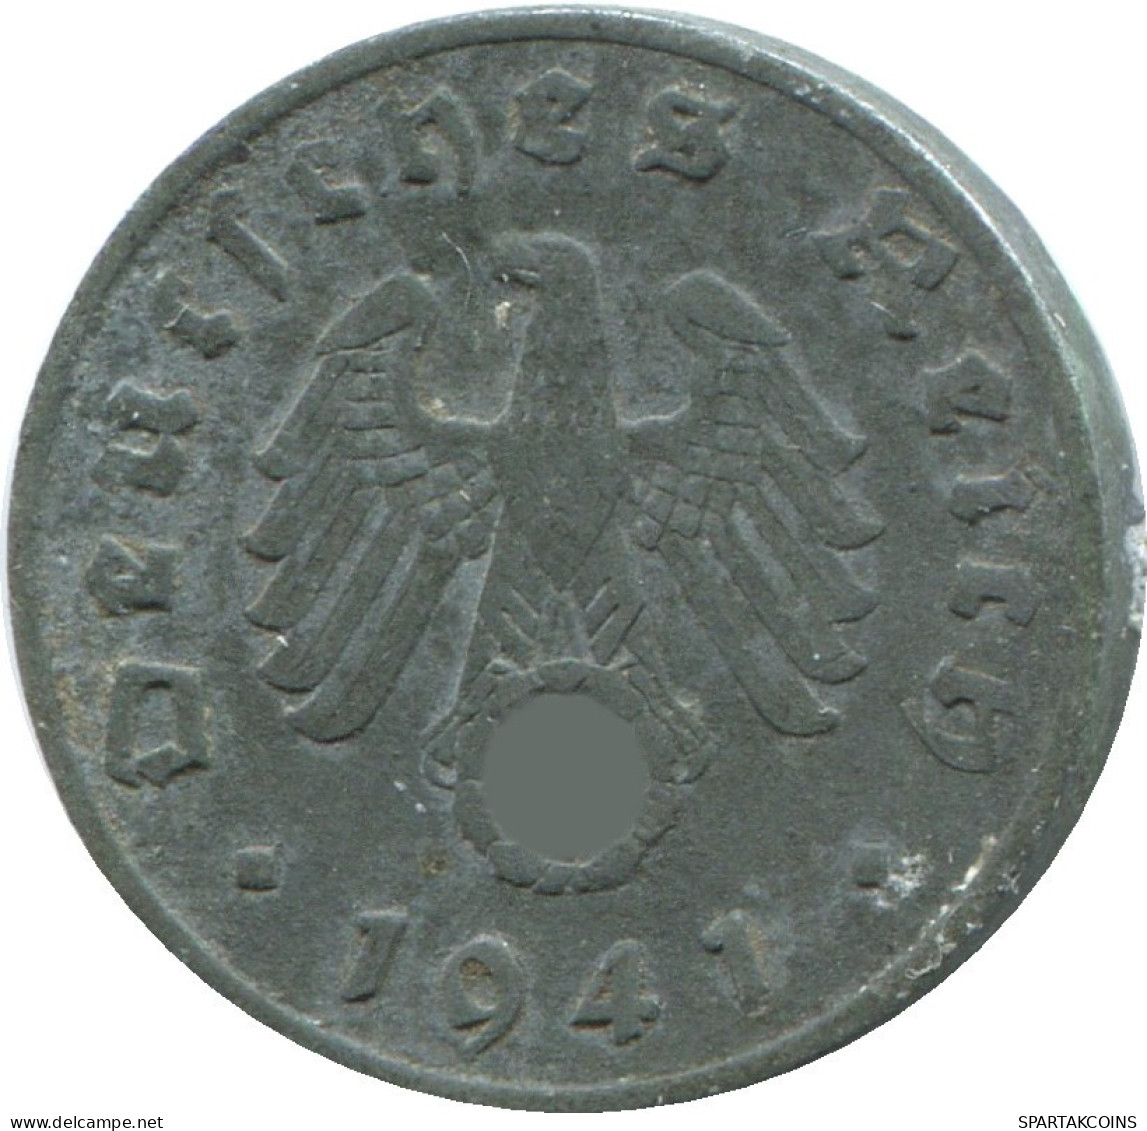 1 REICHSPFENNIG 1941 A ALEMANIA Moneda GERMANY #DE10423.5.E.A - 1 Reichspfennig